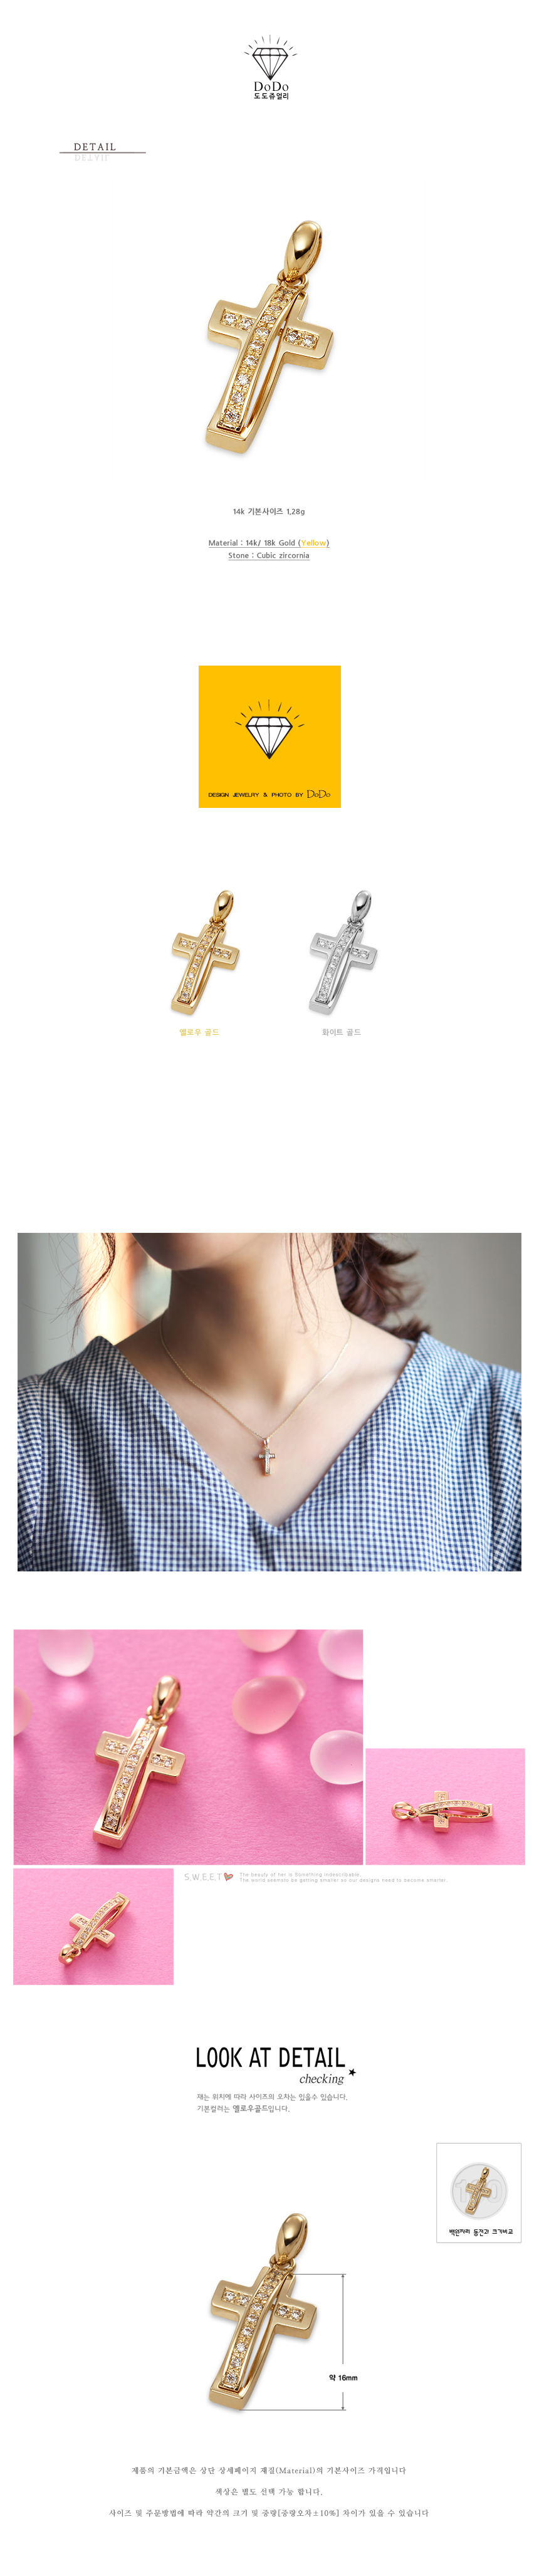 14K / 18K GOLD 정품 골드 팬던트 여성 여자 명품 금 [2788]